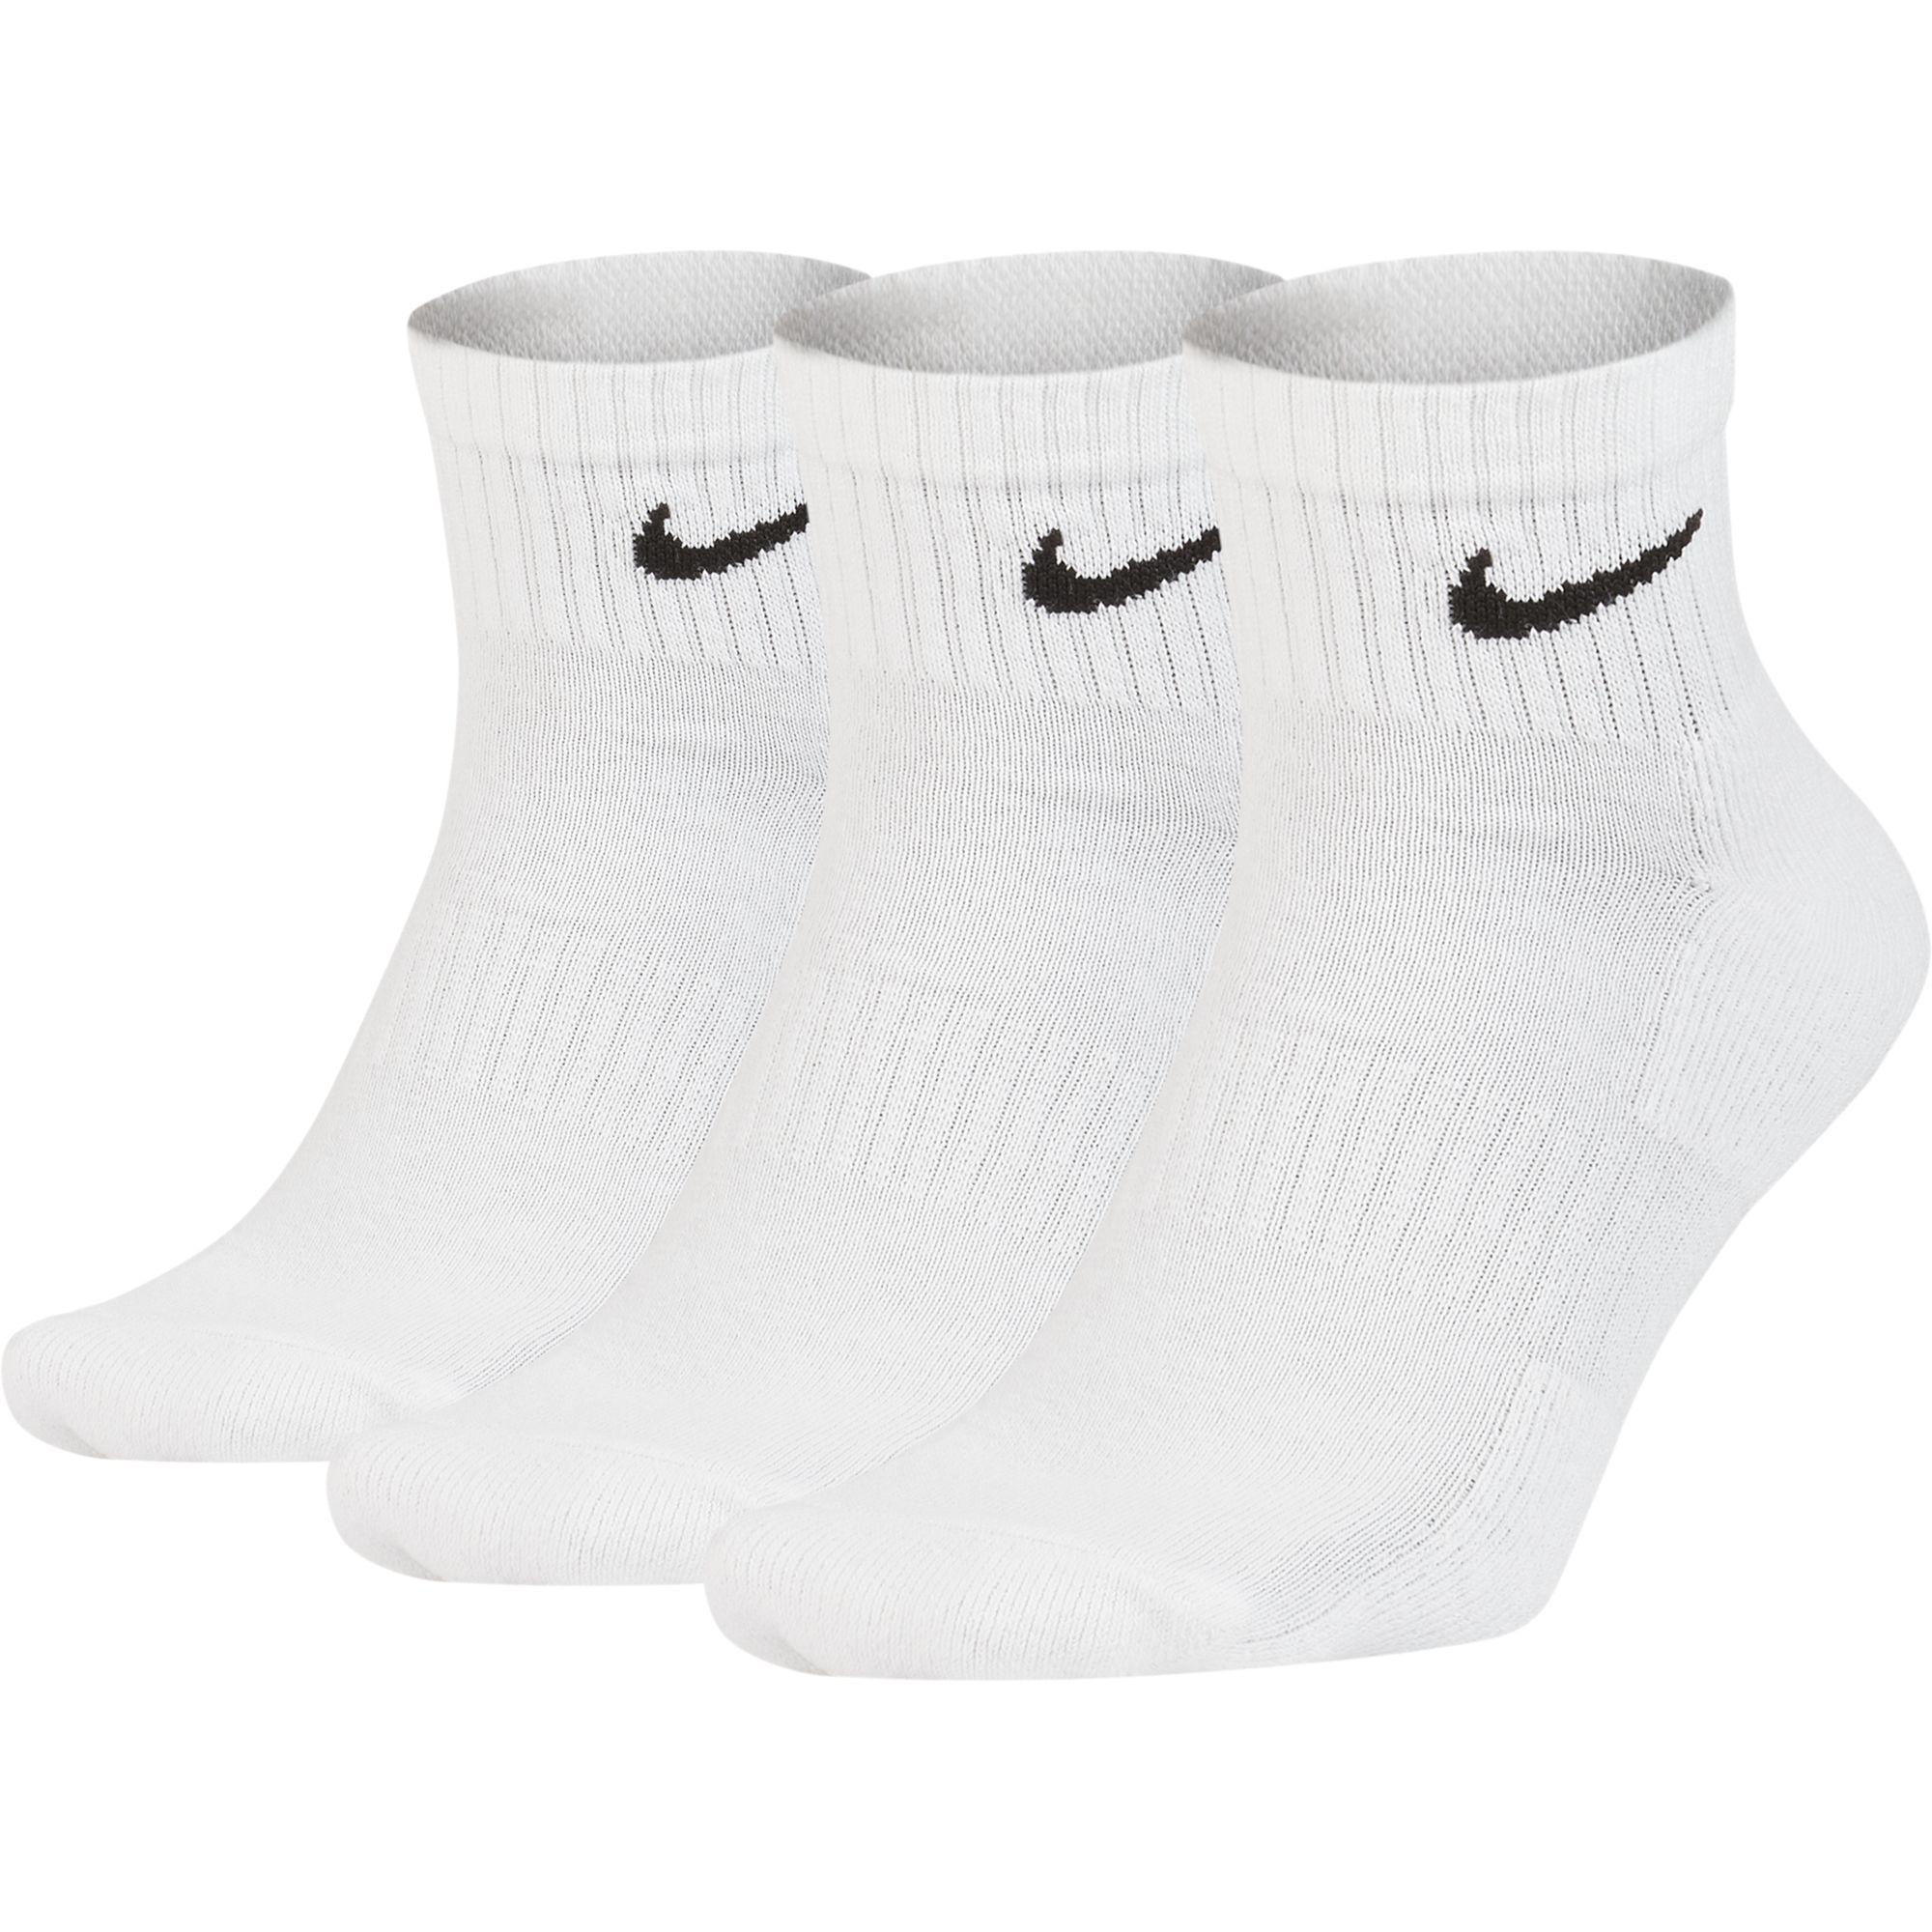 Nike Everyday Training Socks (3 Pairs) - White/Black - Tennisnuts.com